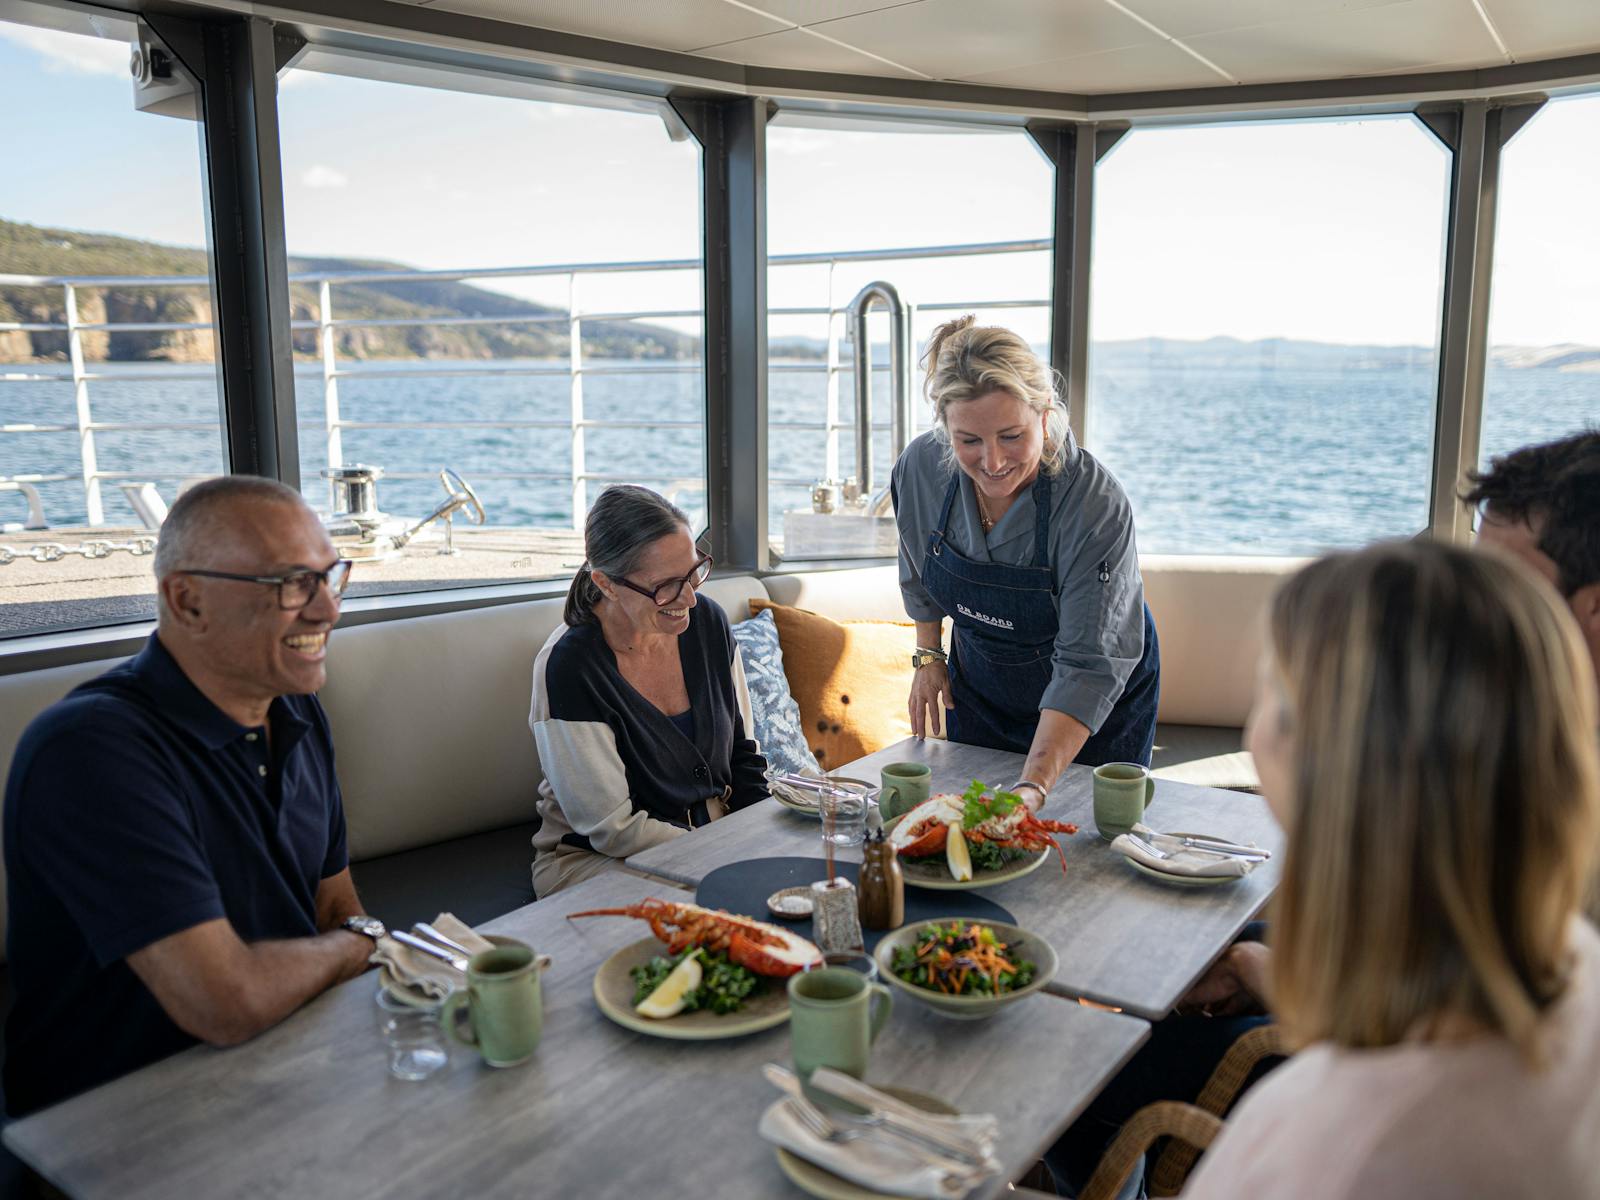 On Board's chef prepares meals of gourmet Tasmanian seafood